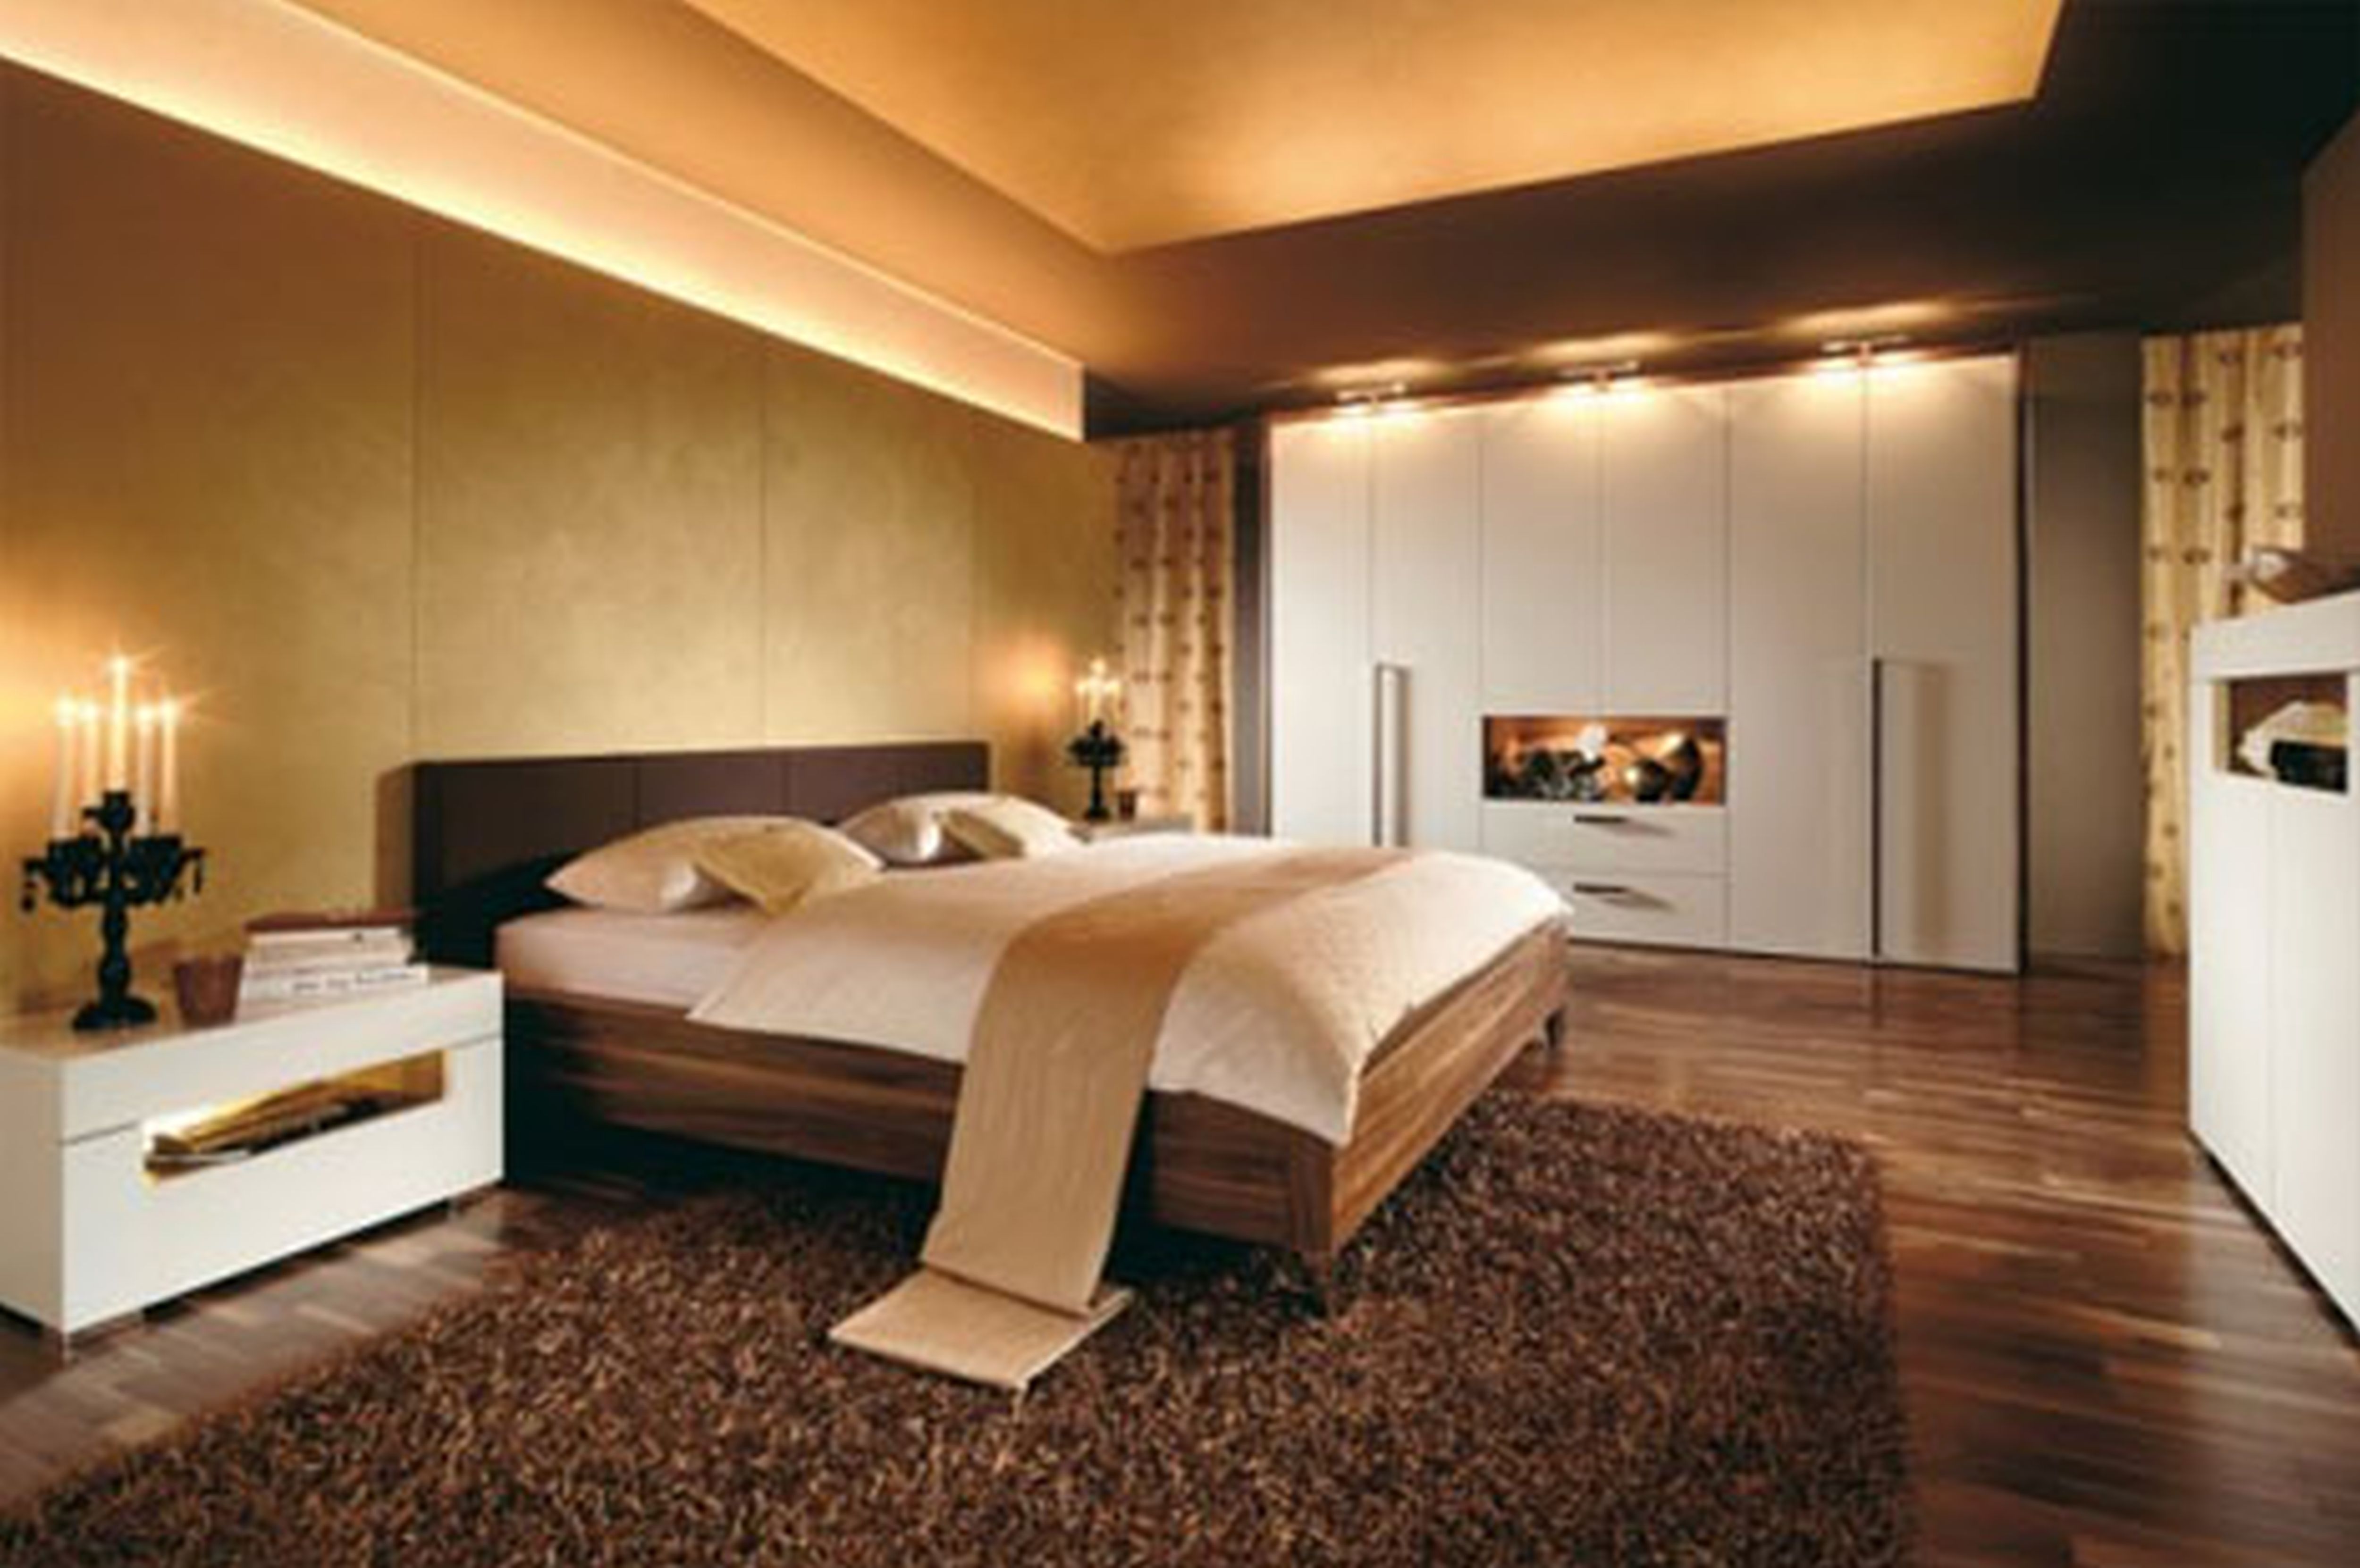 Master Bedroom Decor Ideas - Incorporate Texture